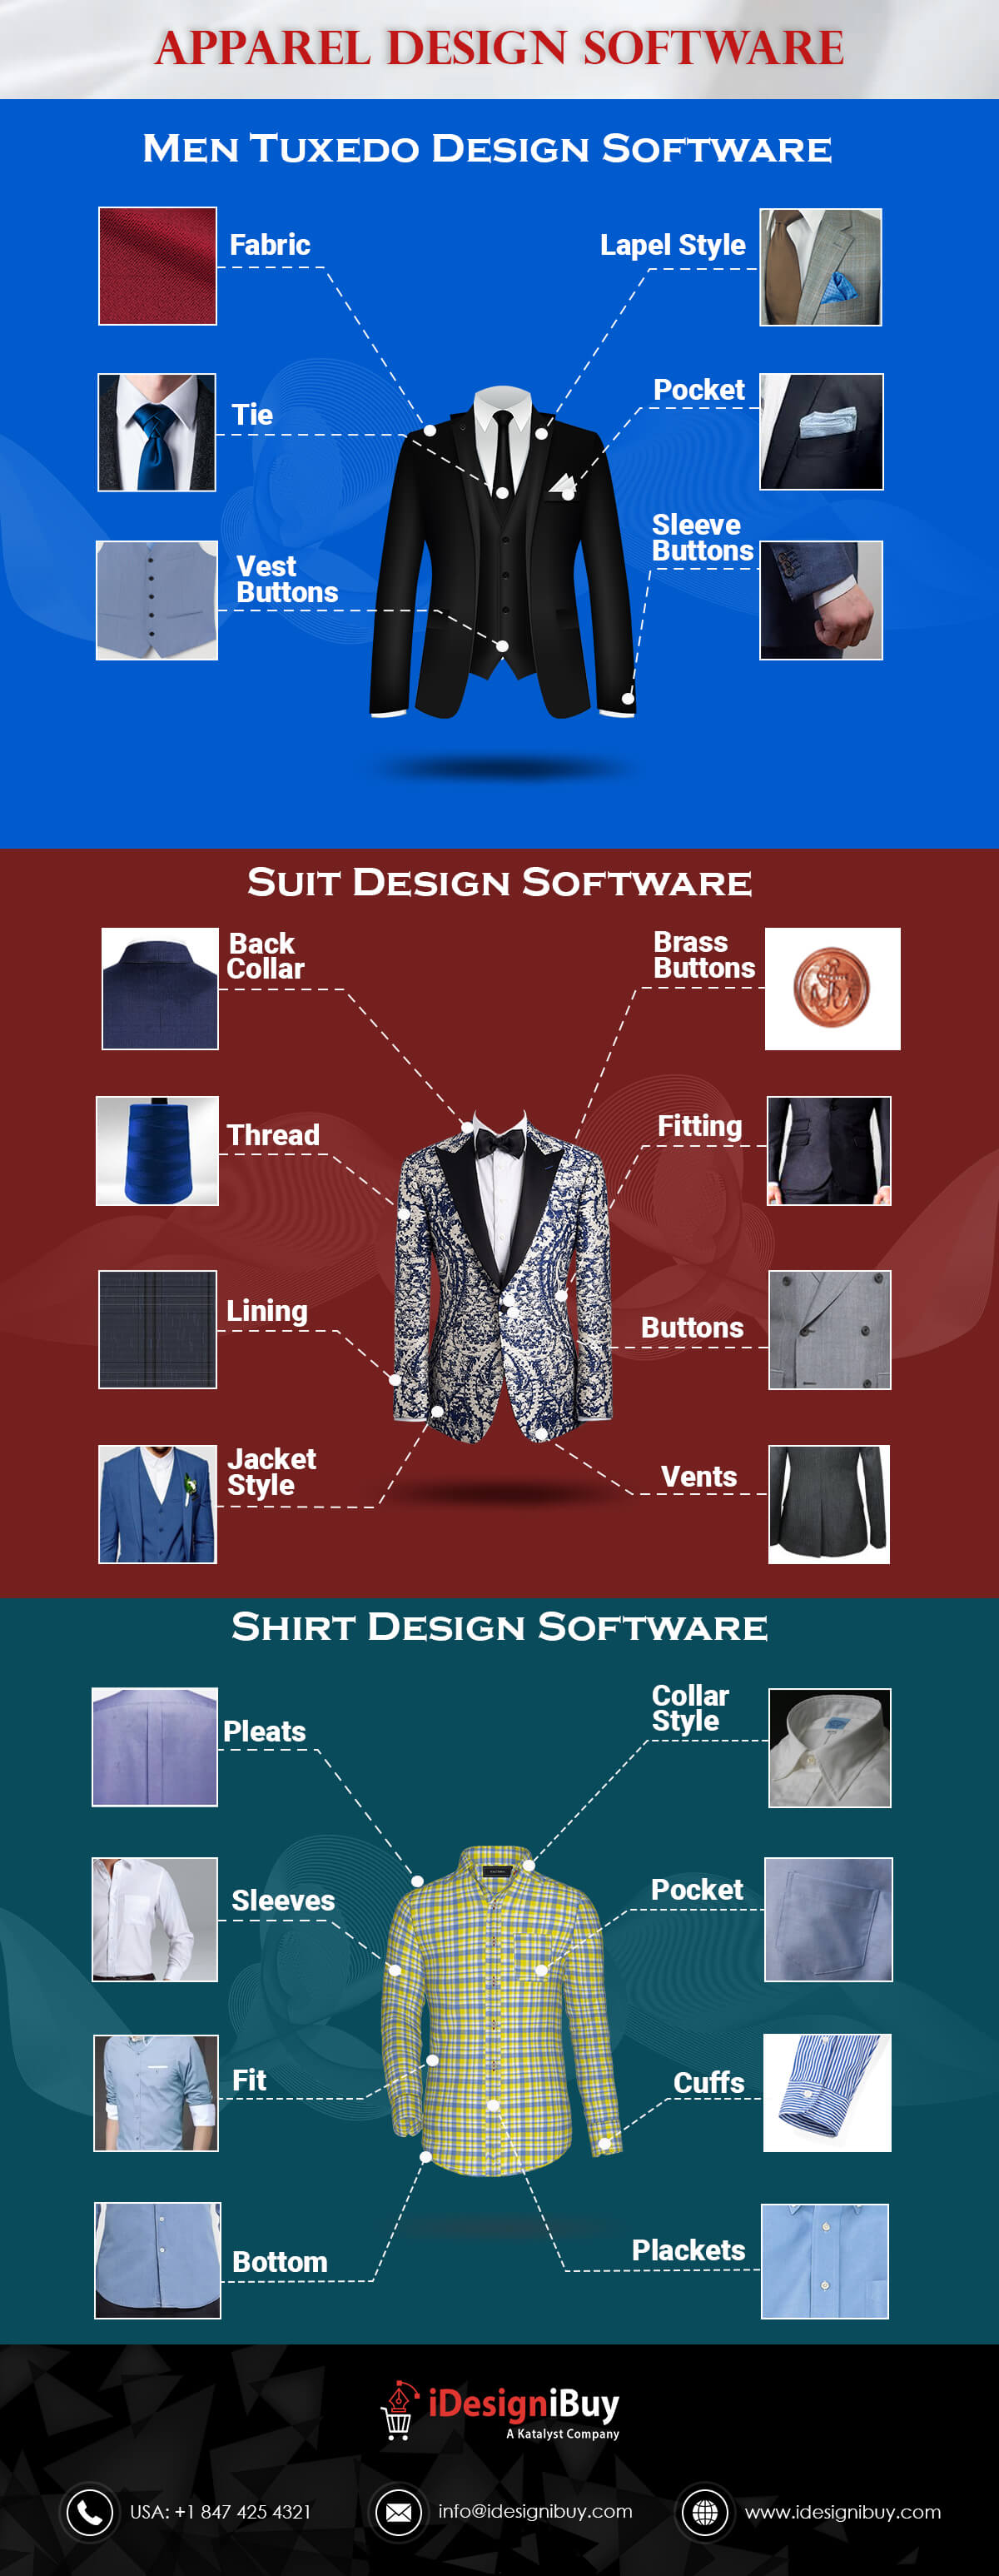 Apparel Design Software